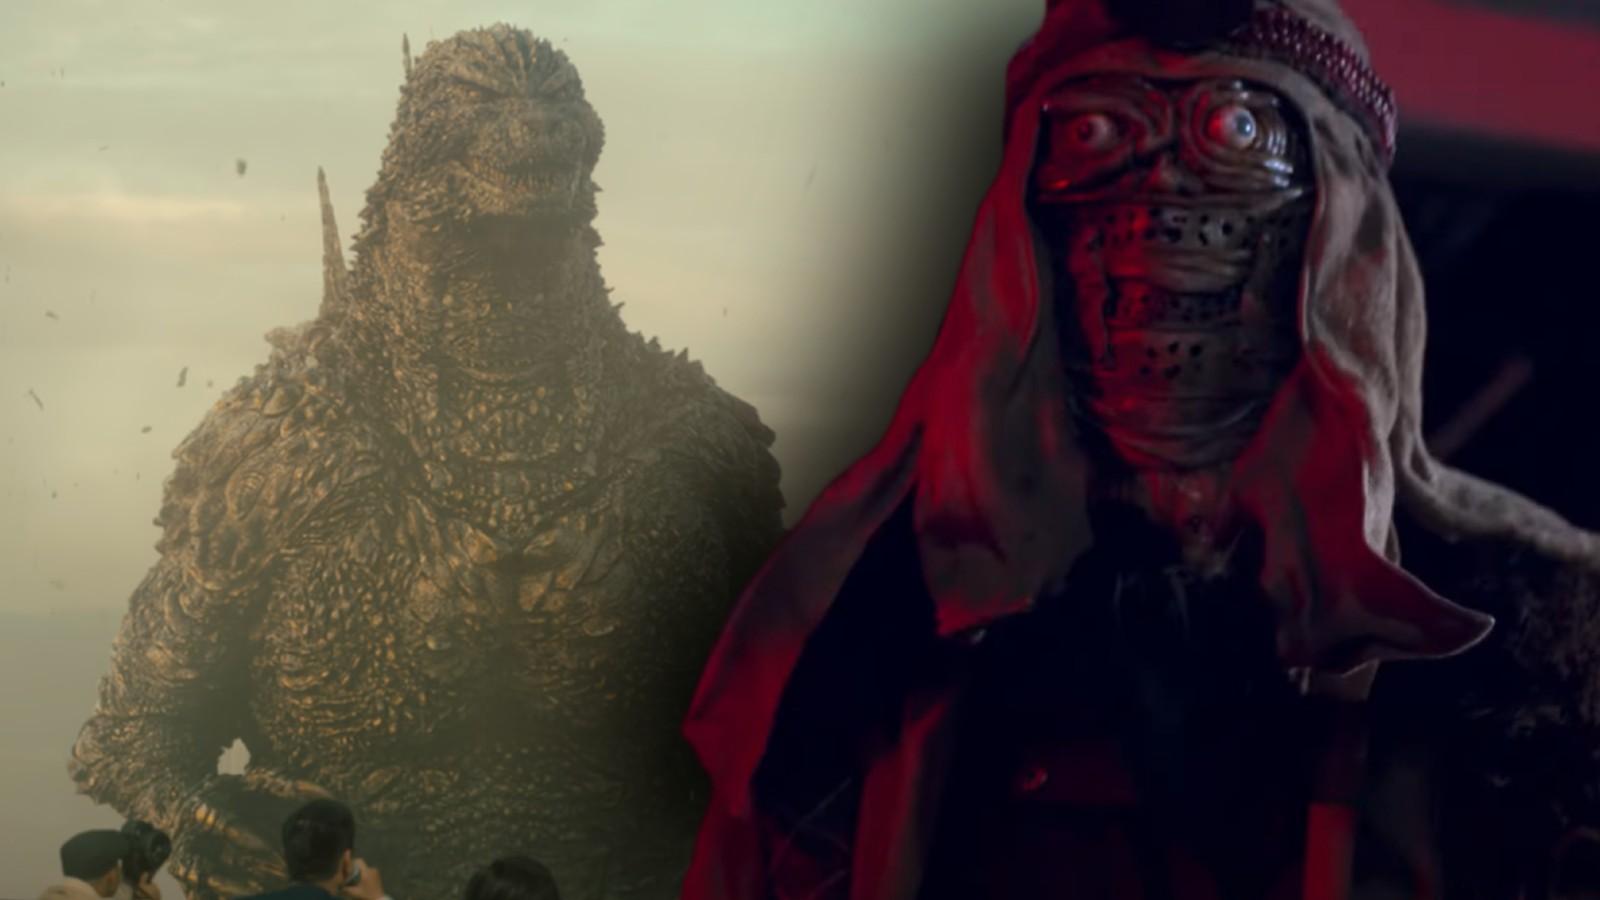 Stills from Godzilla Minus One and Lumberjack the Monster